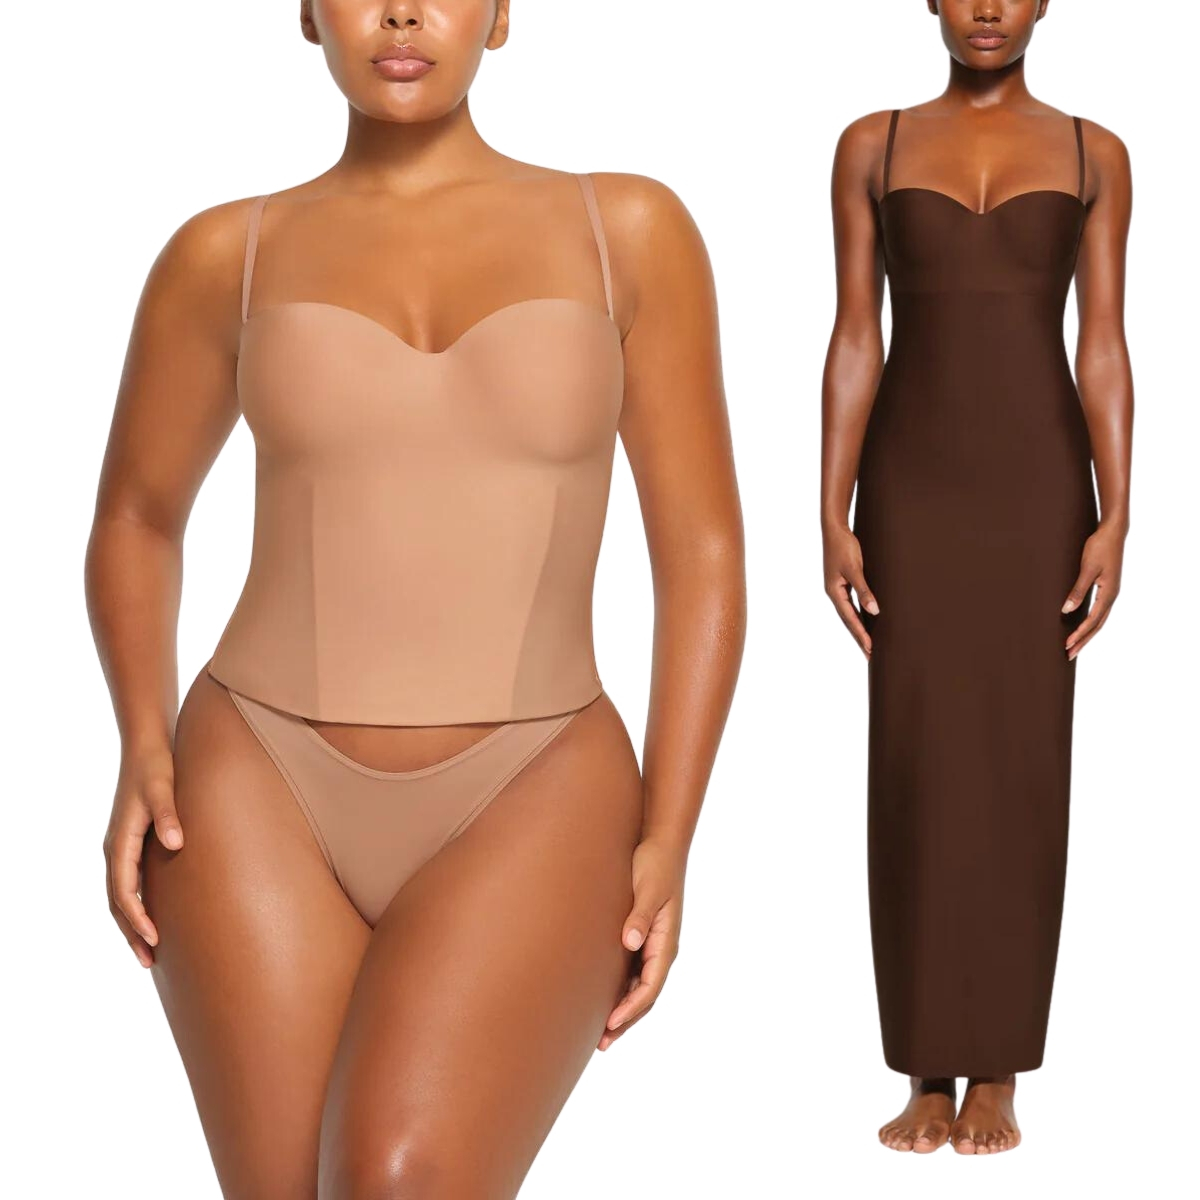 Kim Kardashian Models Her Comfy New Skims Clothing That Just Launched  Online!: Photo 4509607, Kim Kardashian, Shopping Photos